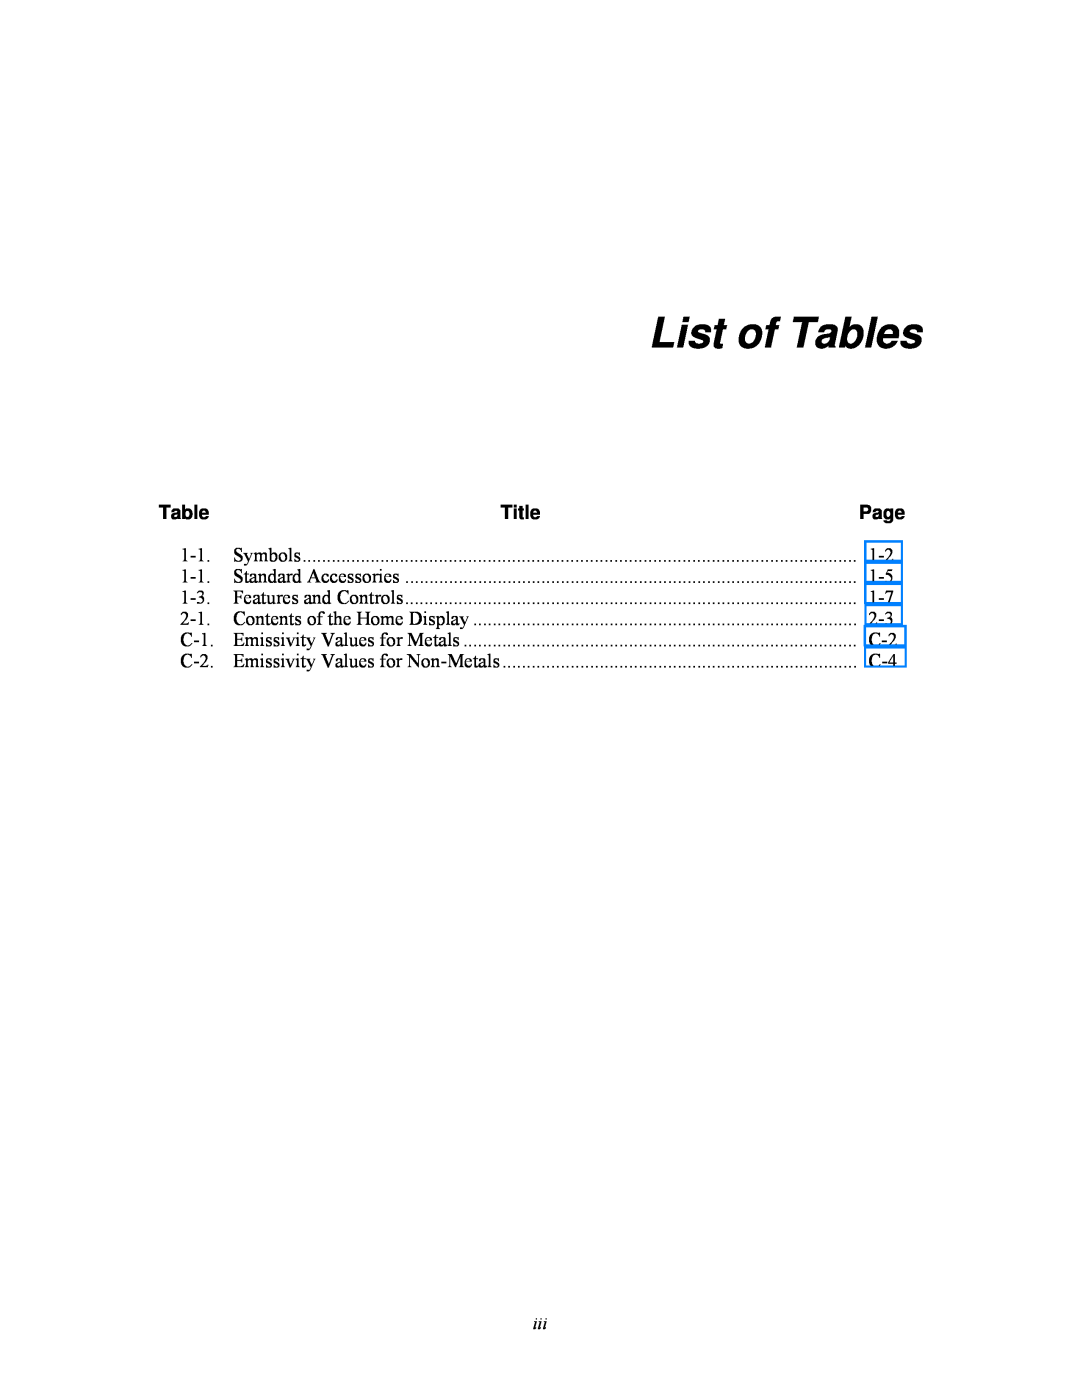 Fluke Ti20 user manual List of Tables, Title 